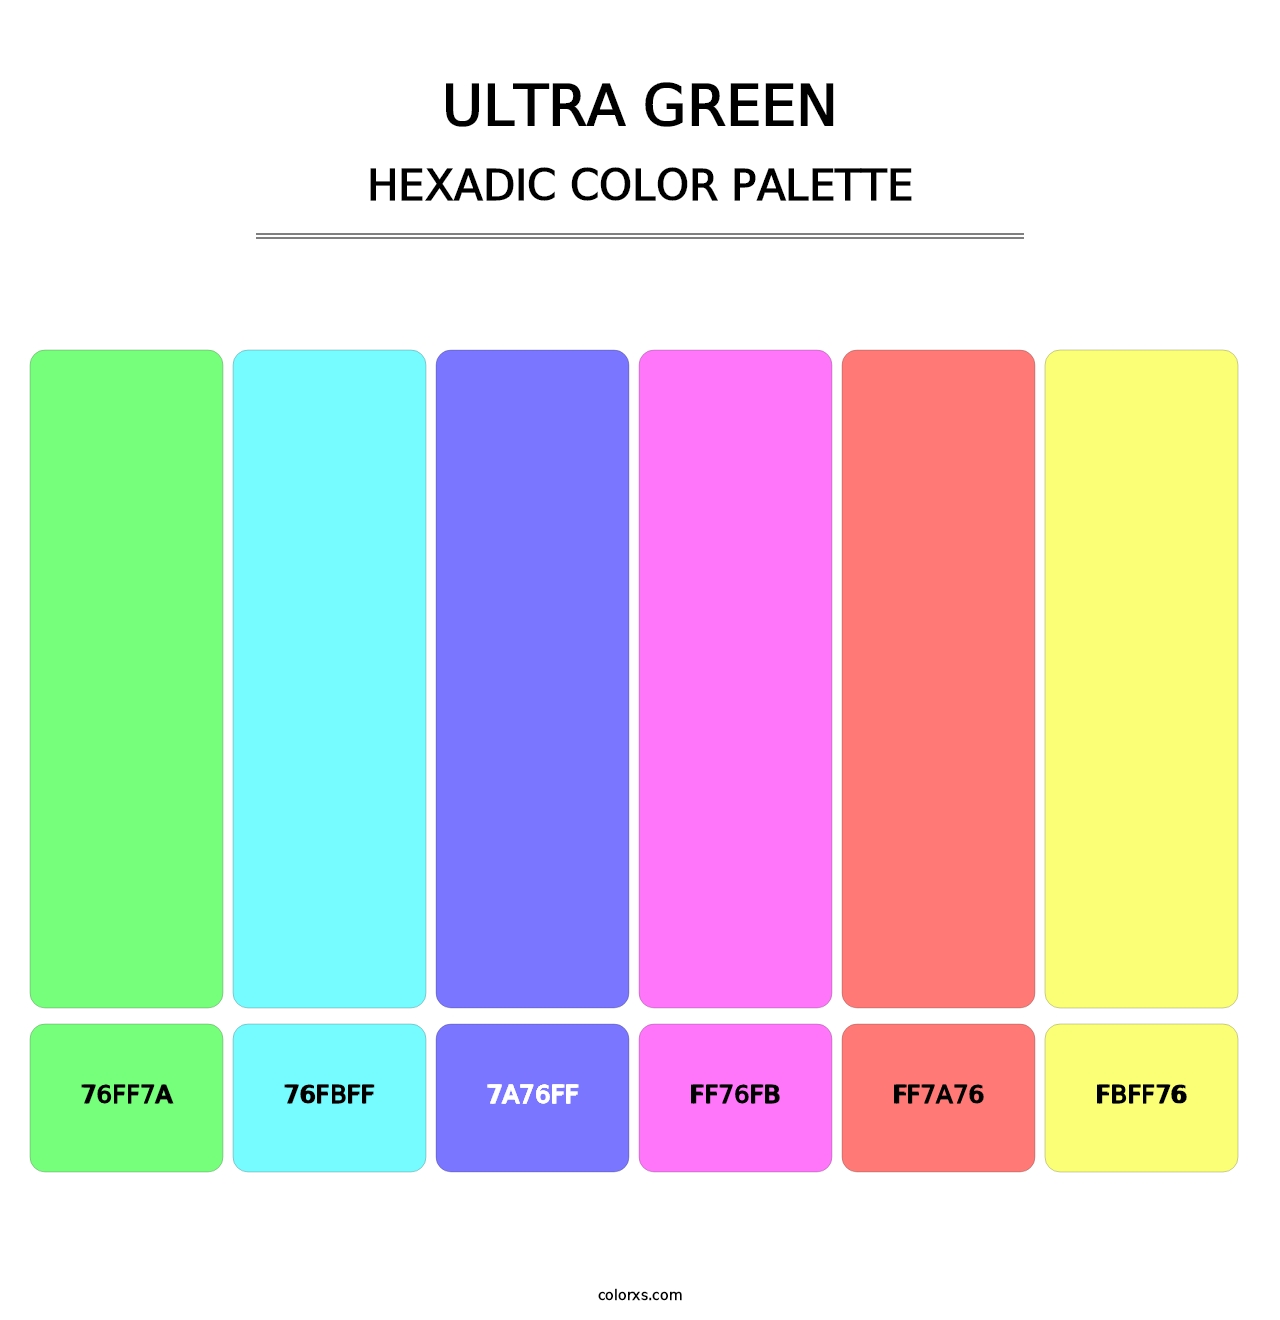 Ultra Green - Hexadic Color Palette